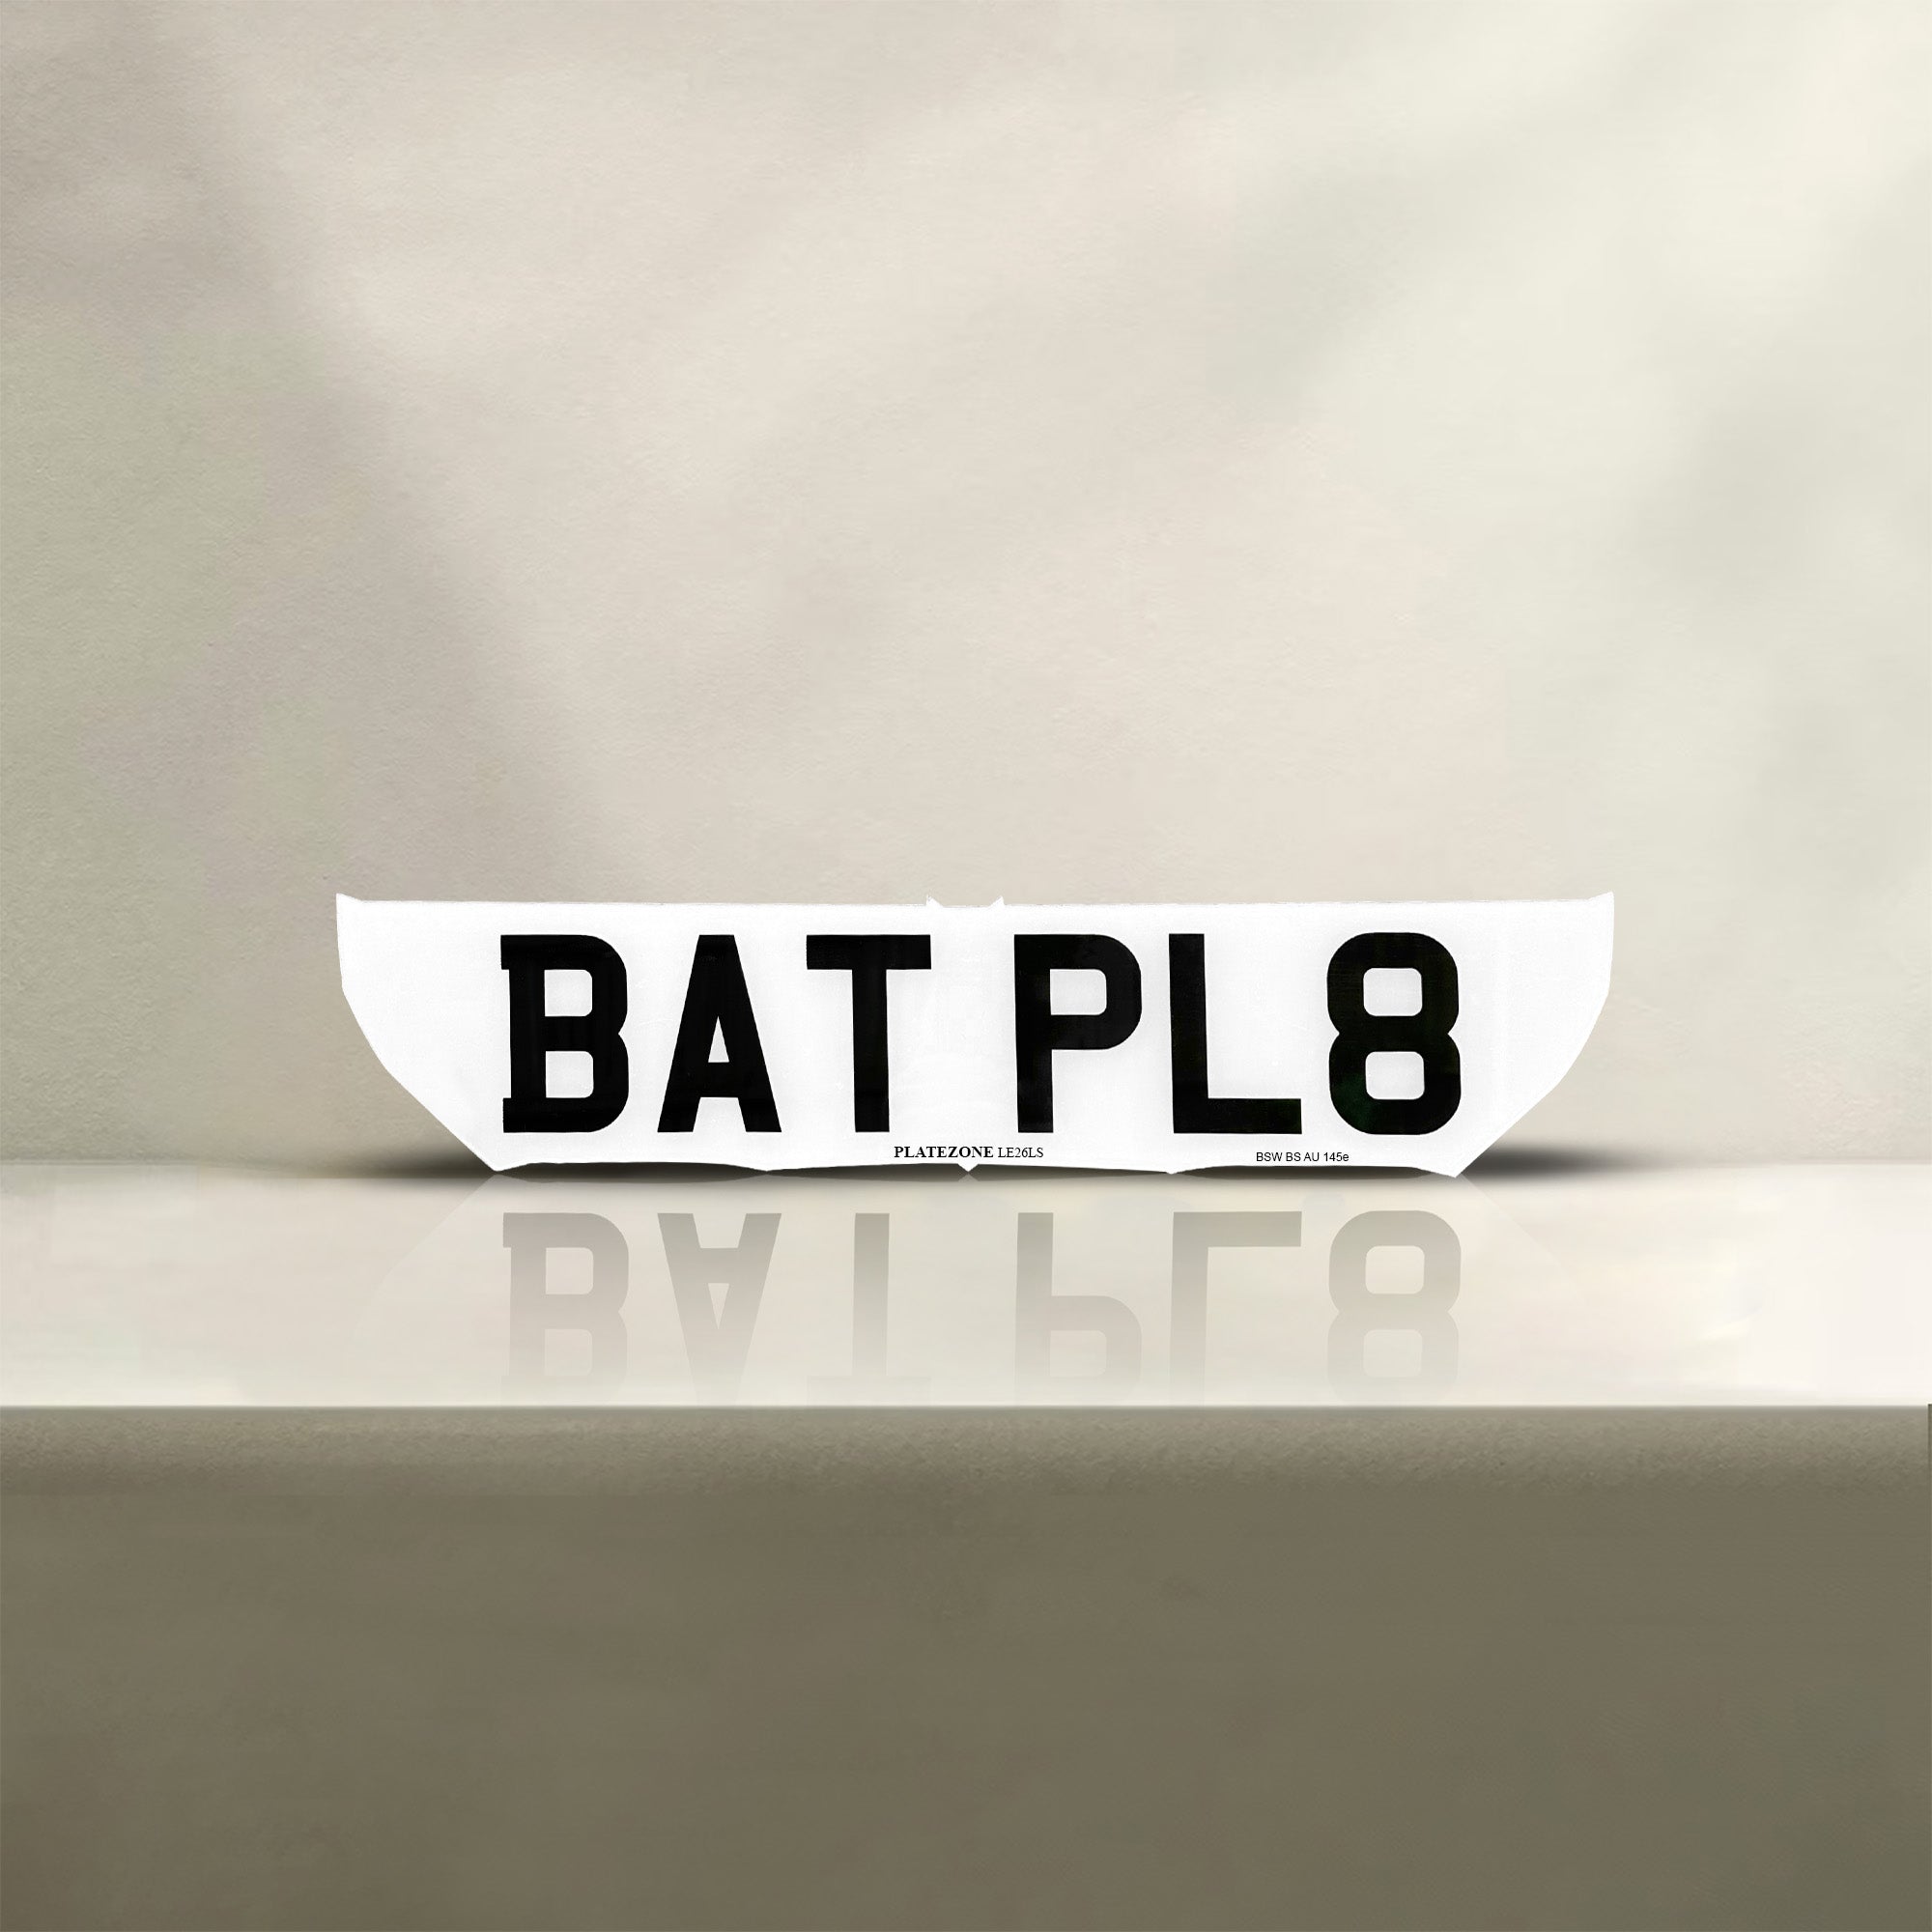 Batman Number Plate